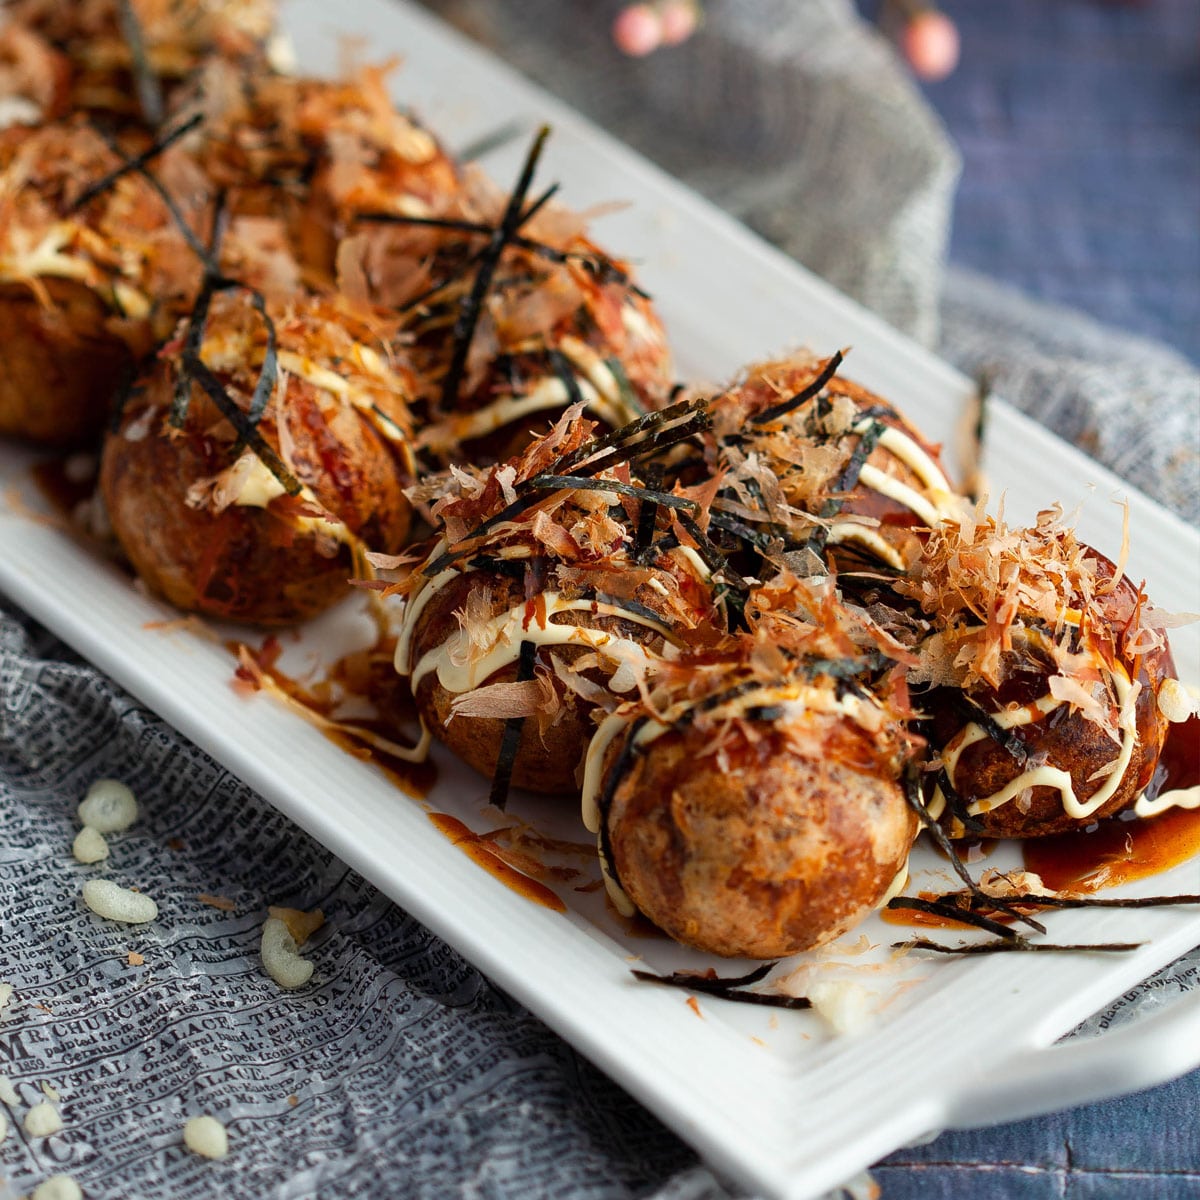 Takoyaki balls are fluffy, rich-tasting dough balls covered in a savory and delicious Takoyaki sauce.